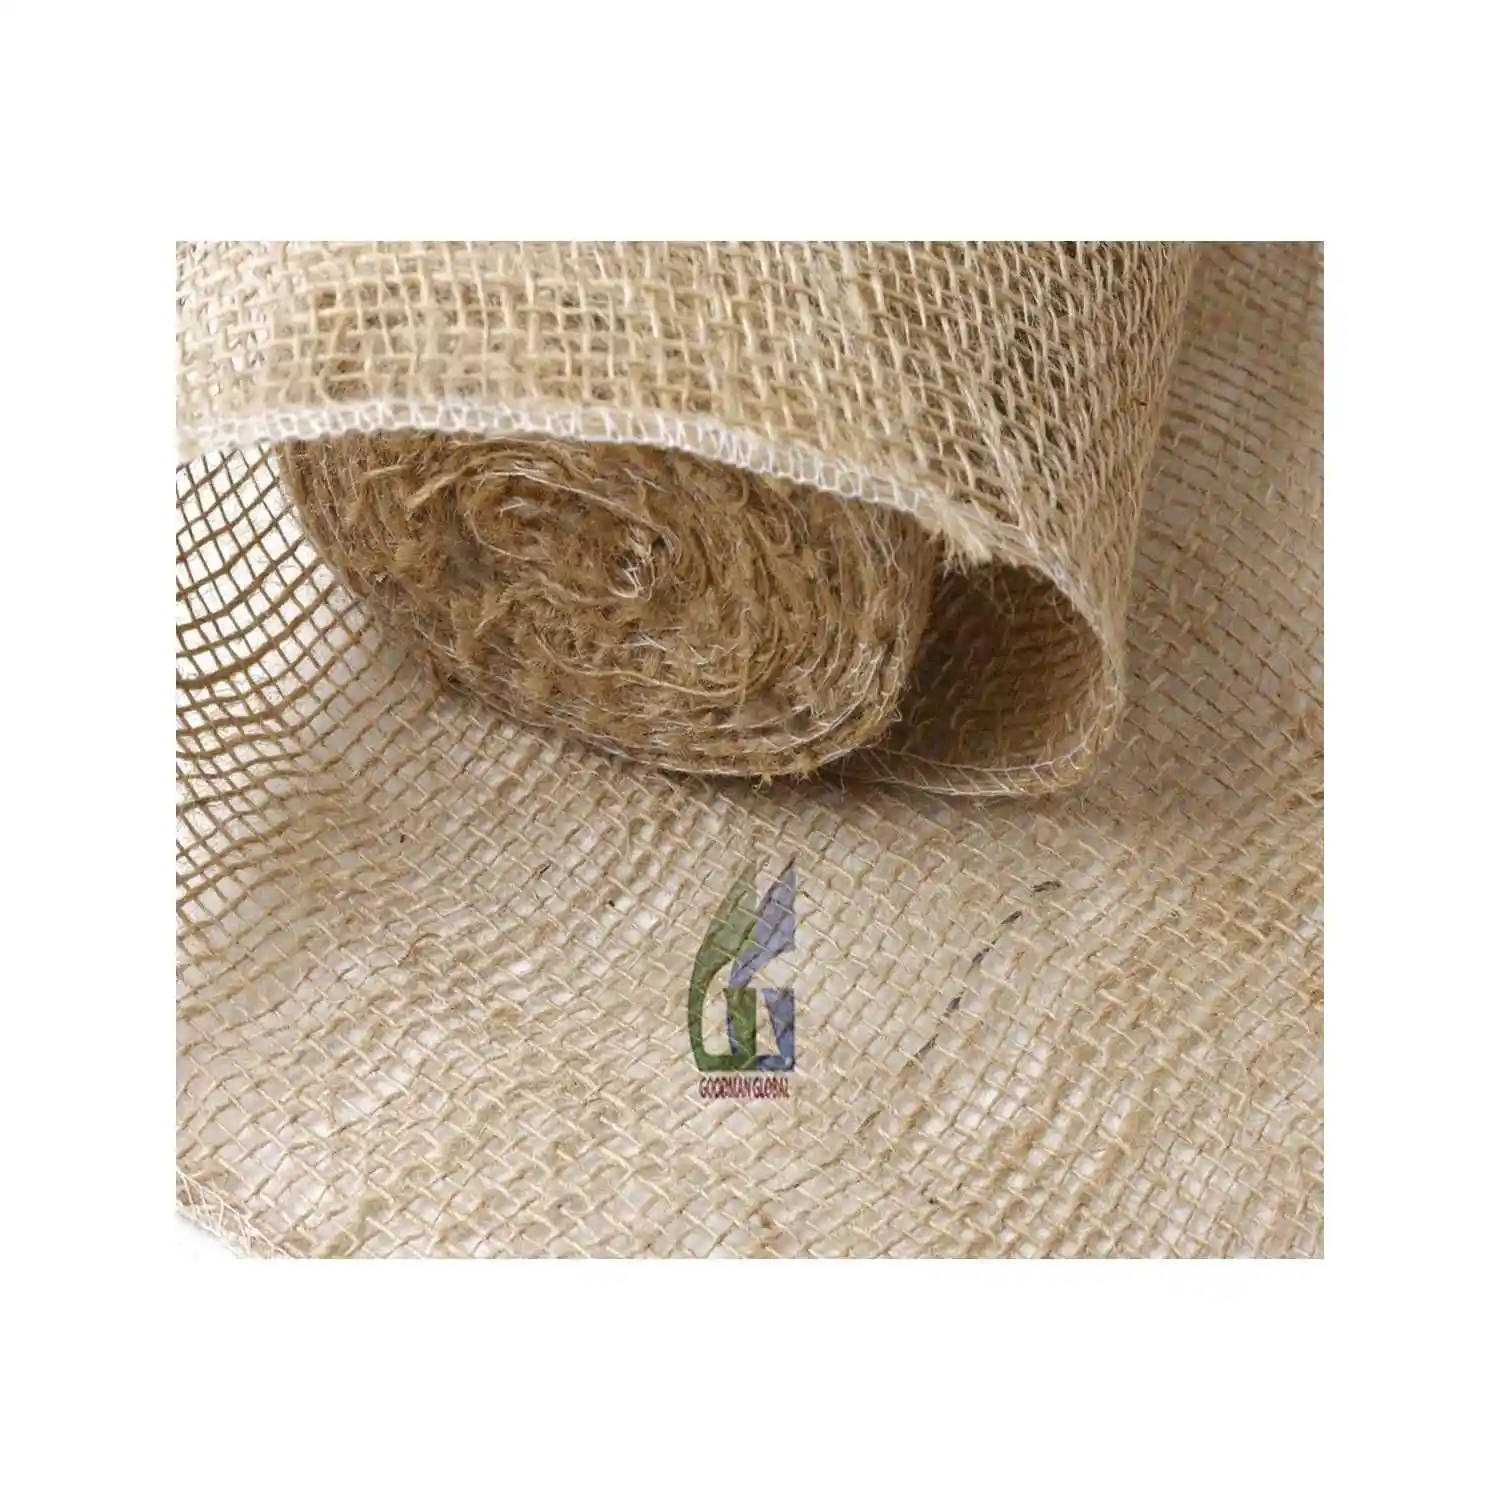 Karpet lebar 150 inci kain pendukung 7 oz kain jala terbuat dari bahan serat halus ramah lingkungan grosir Goodman Global Bangladesh